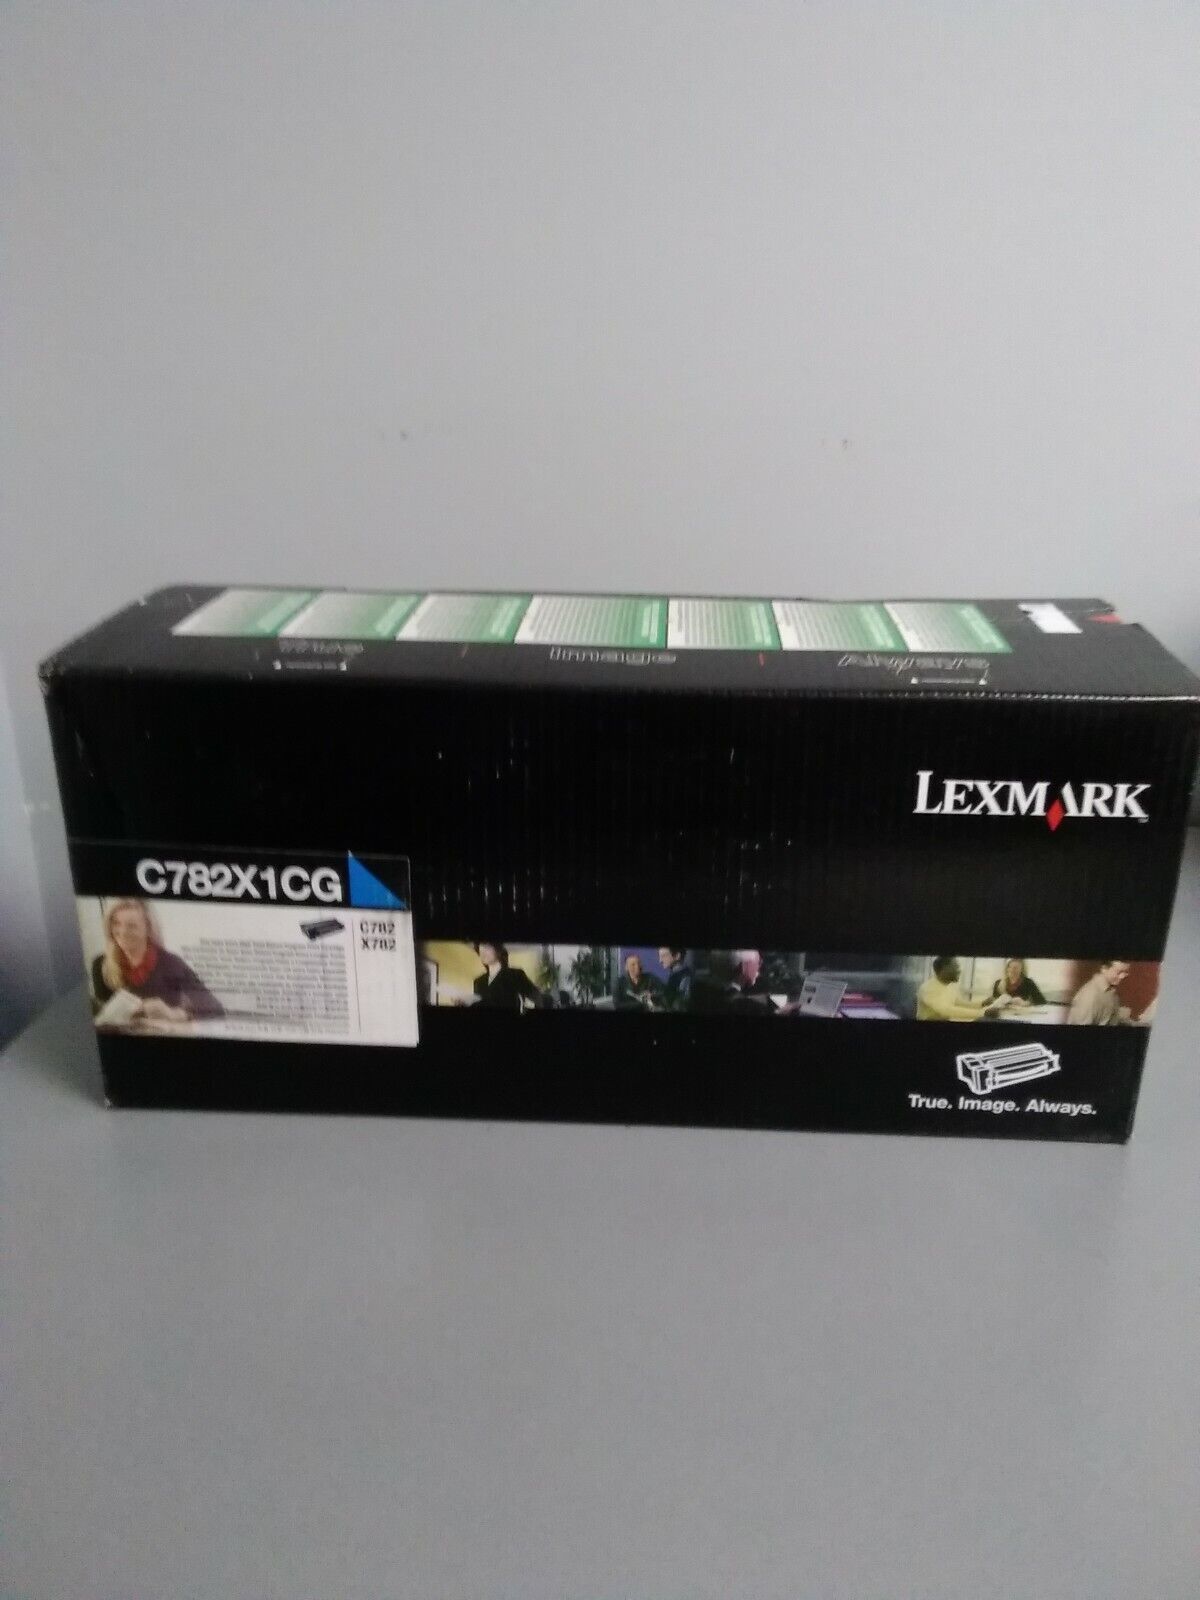 Lexmark Cyan Toner Cartridge, Extra High Yield C782X1CG C782 dn, C782 dtn, C782 